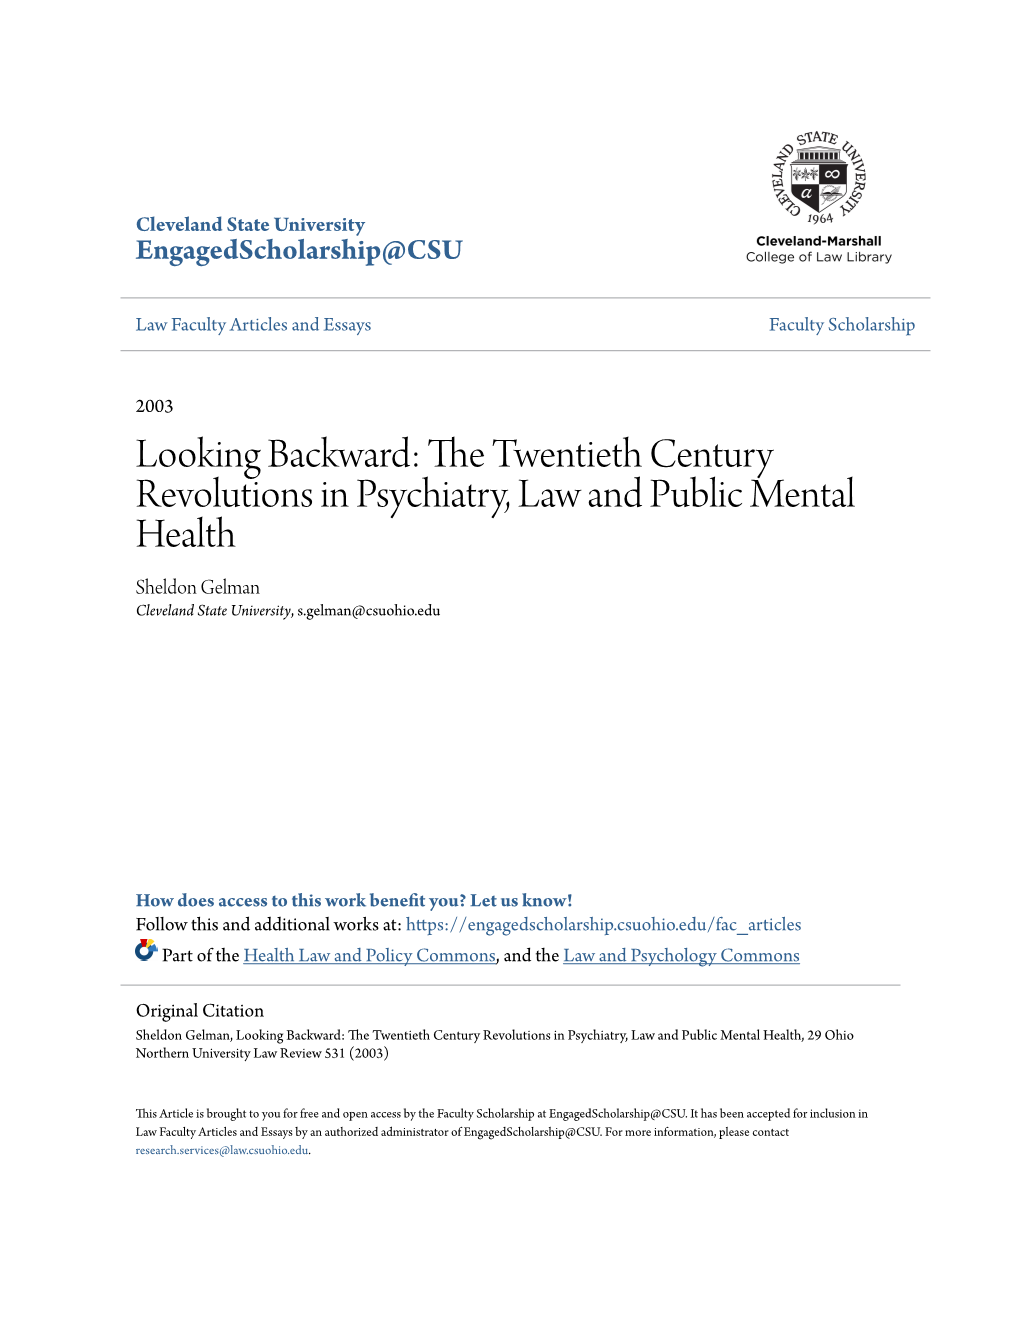 The Twentieth Century Revolutions in Psychiatry, Law and Public